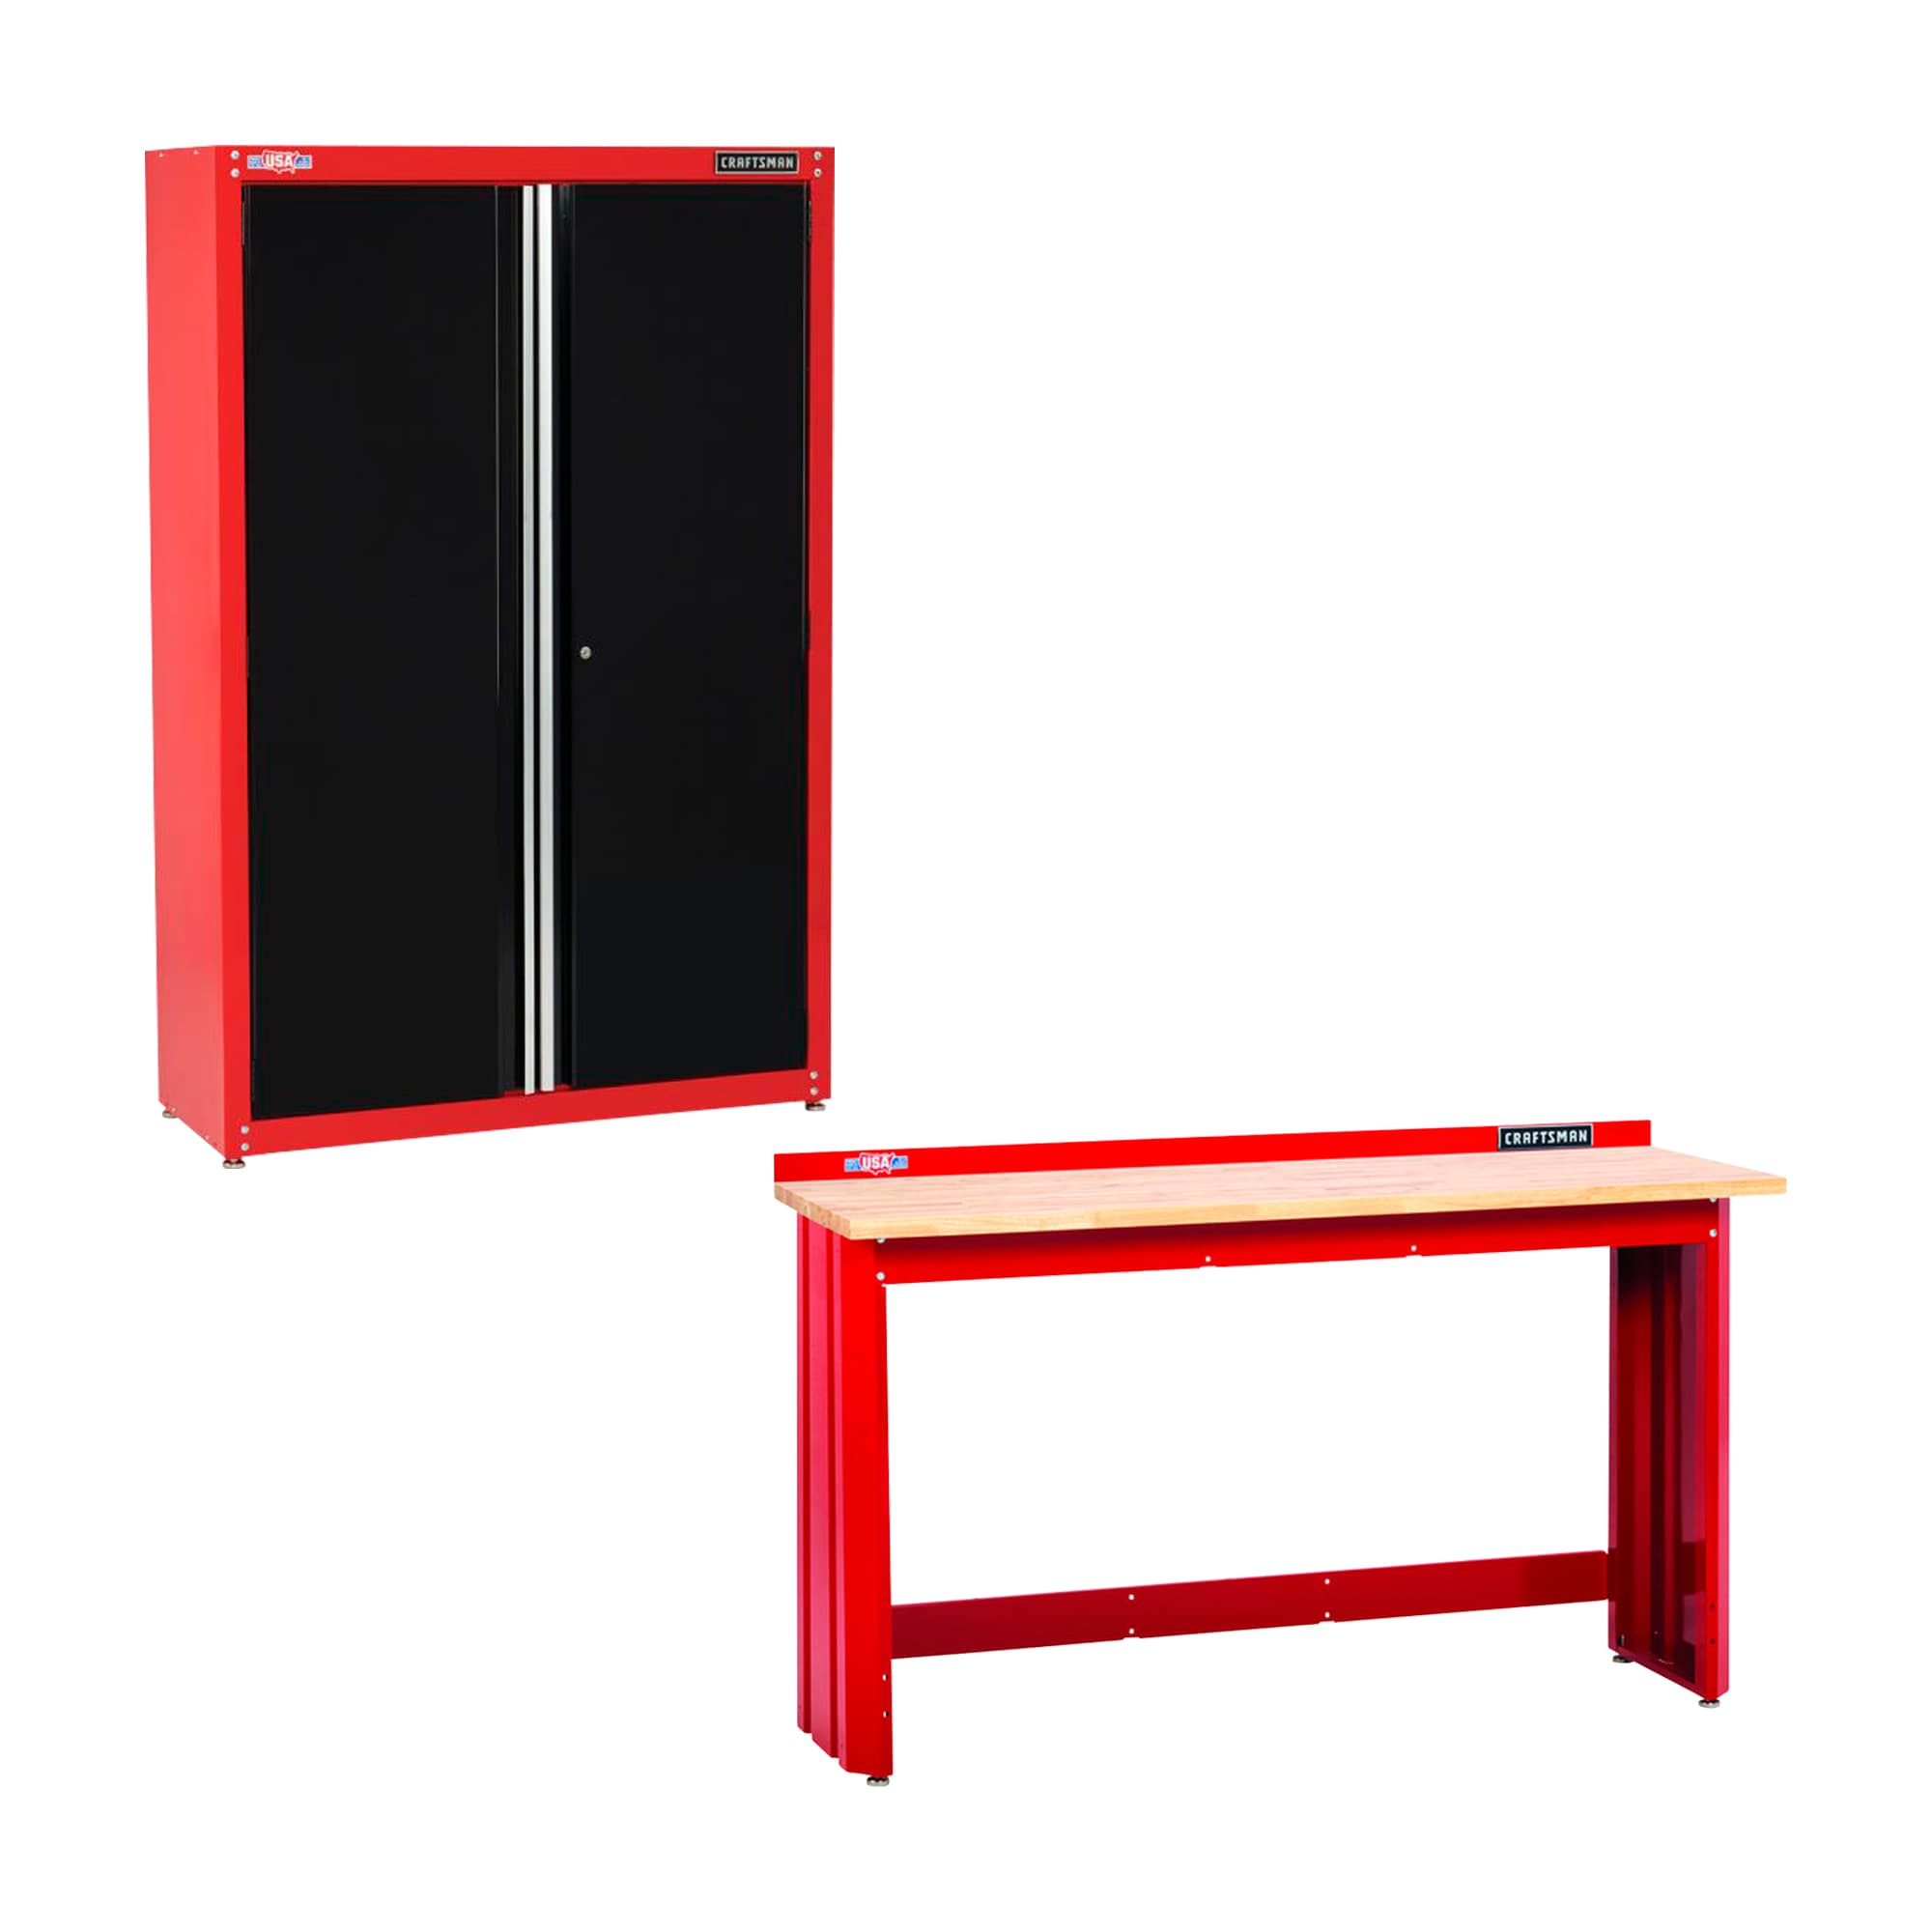 CRAFTSMAN 2000 48-in W x 74-in H x 18-in D Steel Freestanding Garage Cabinet & 72-in W x 41.25-in H Wood Work Bench